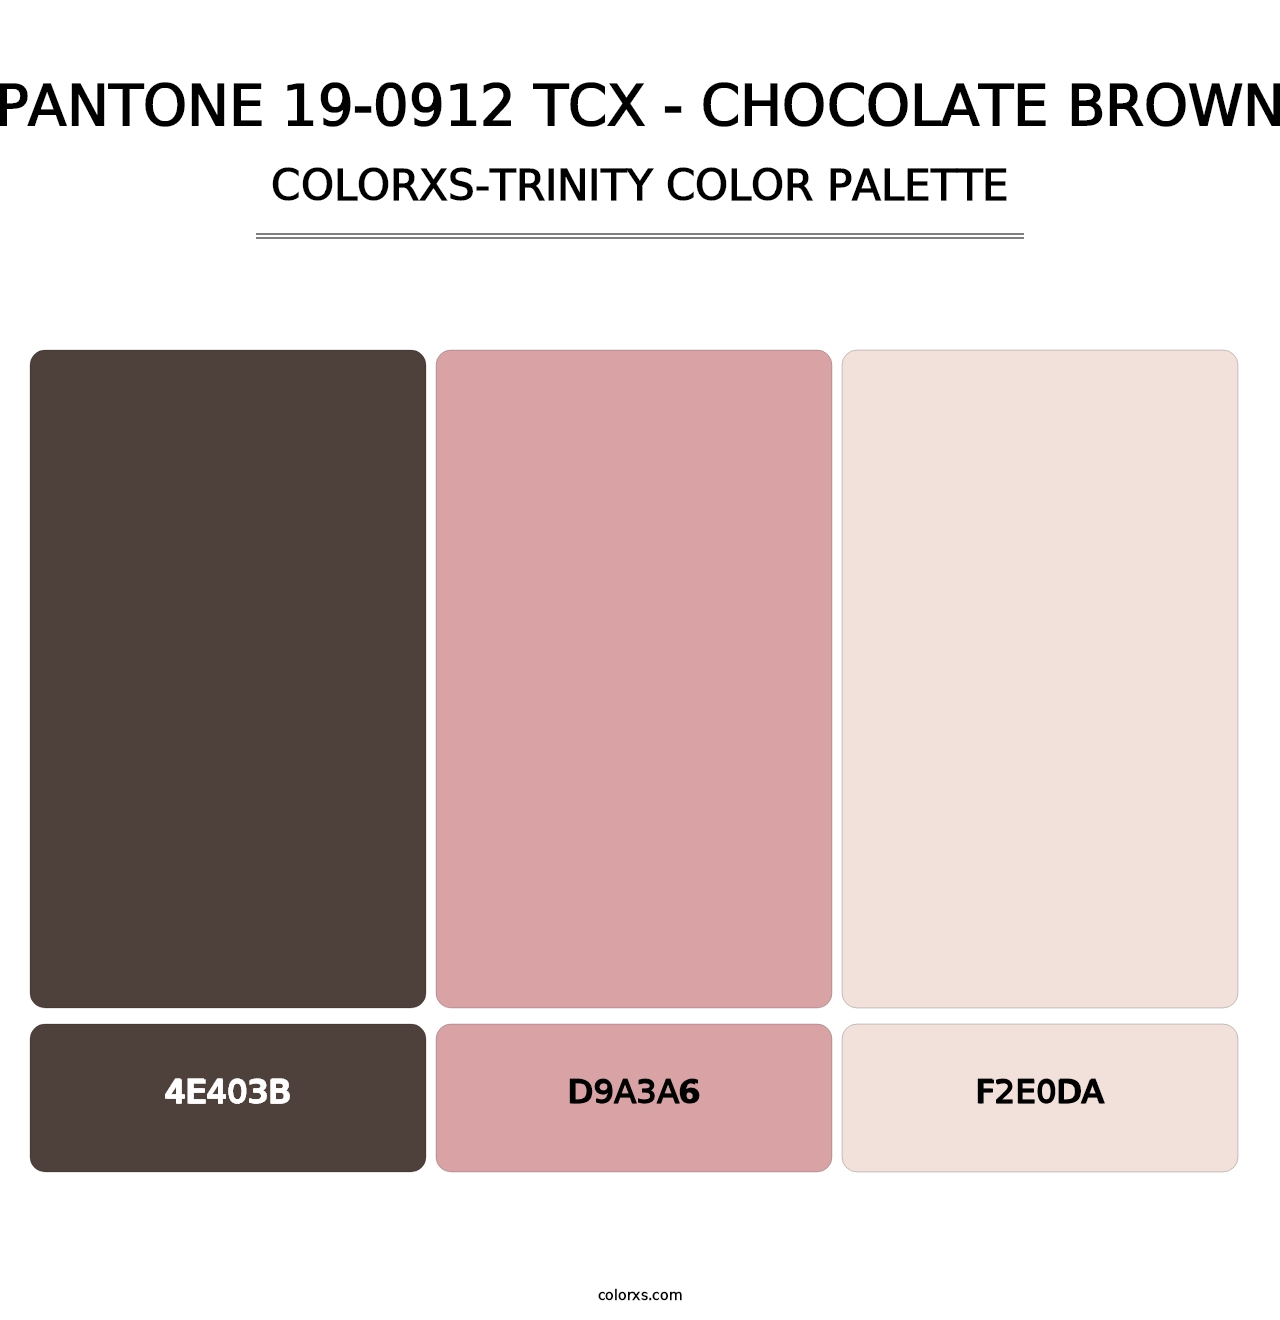 PANTONE 19-0912 TCX - Chocolate Brown - Colorxs Trinity Palette